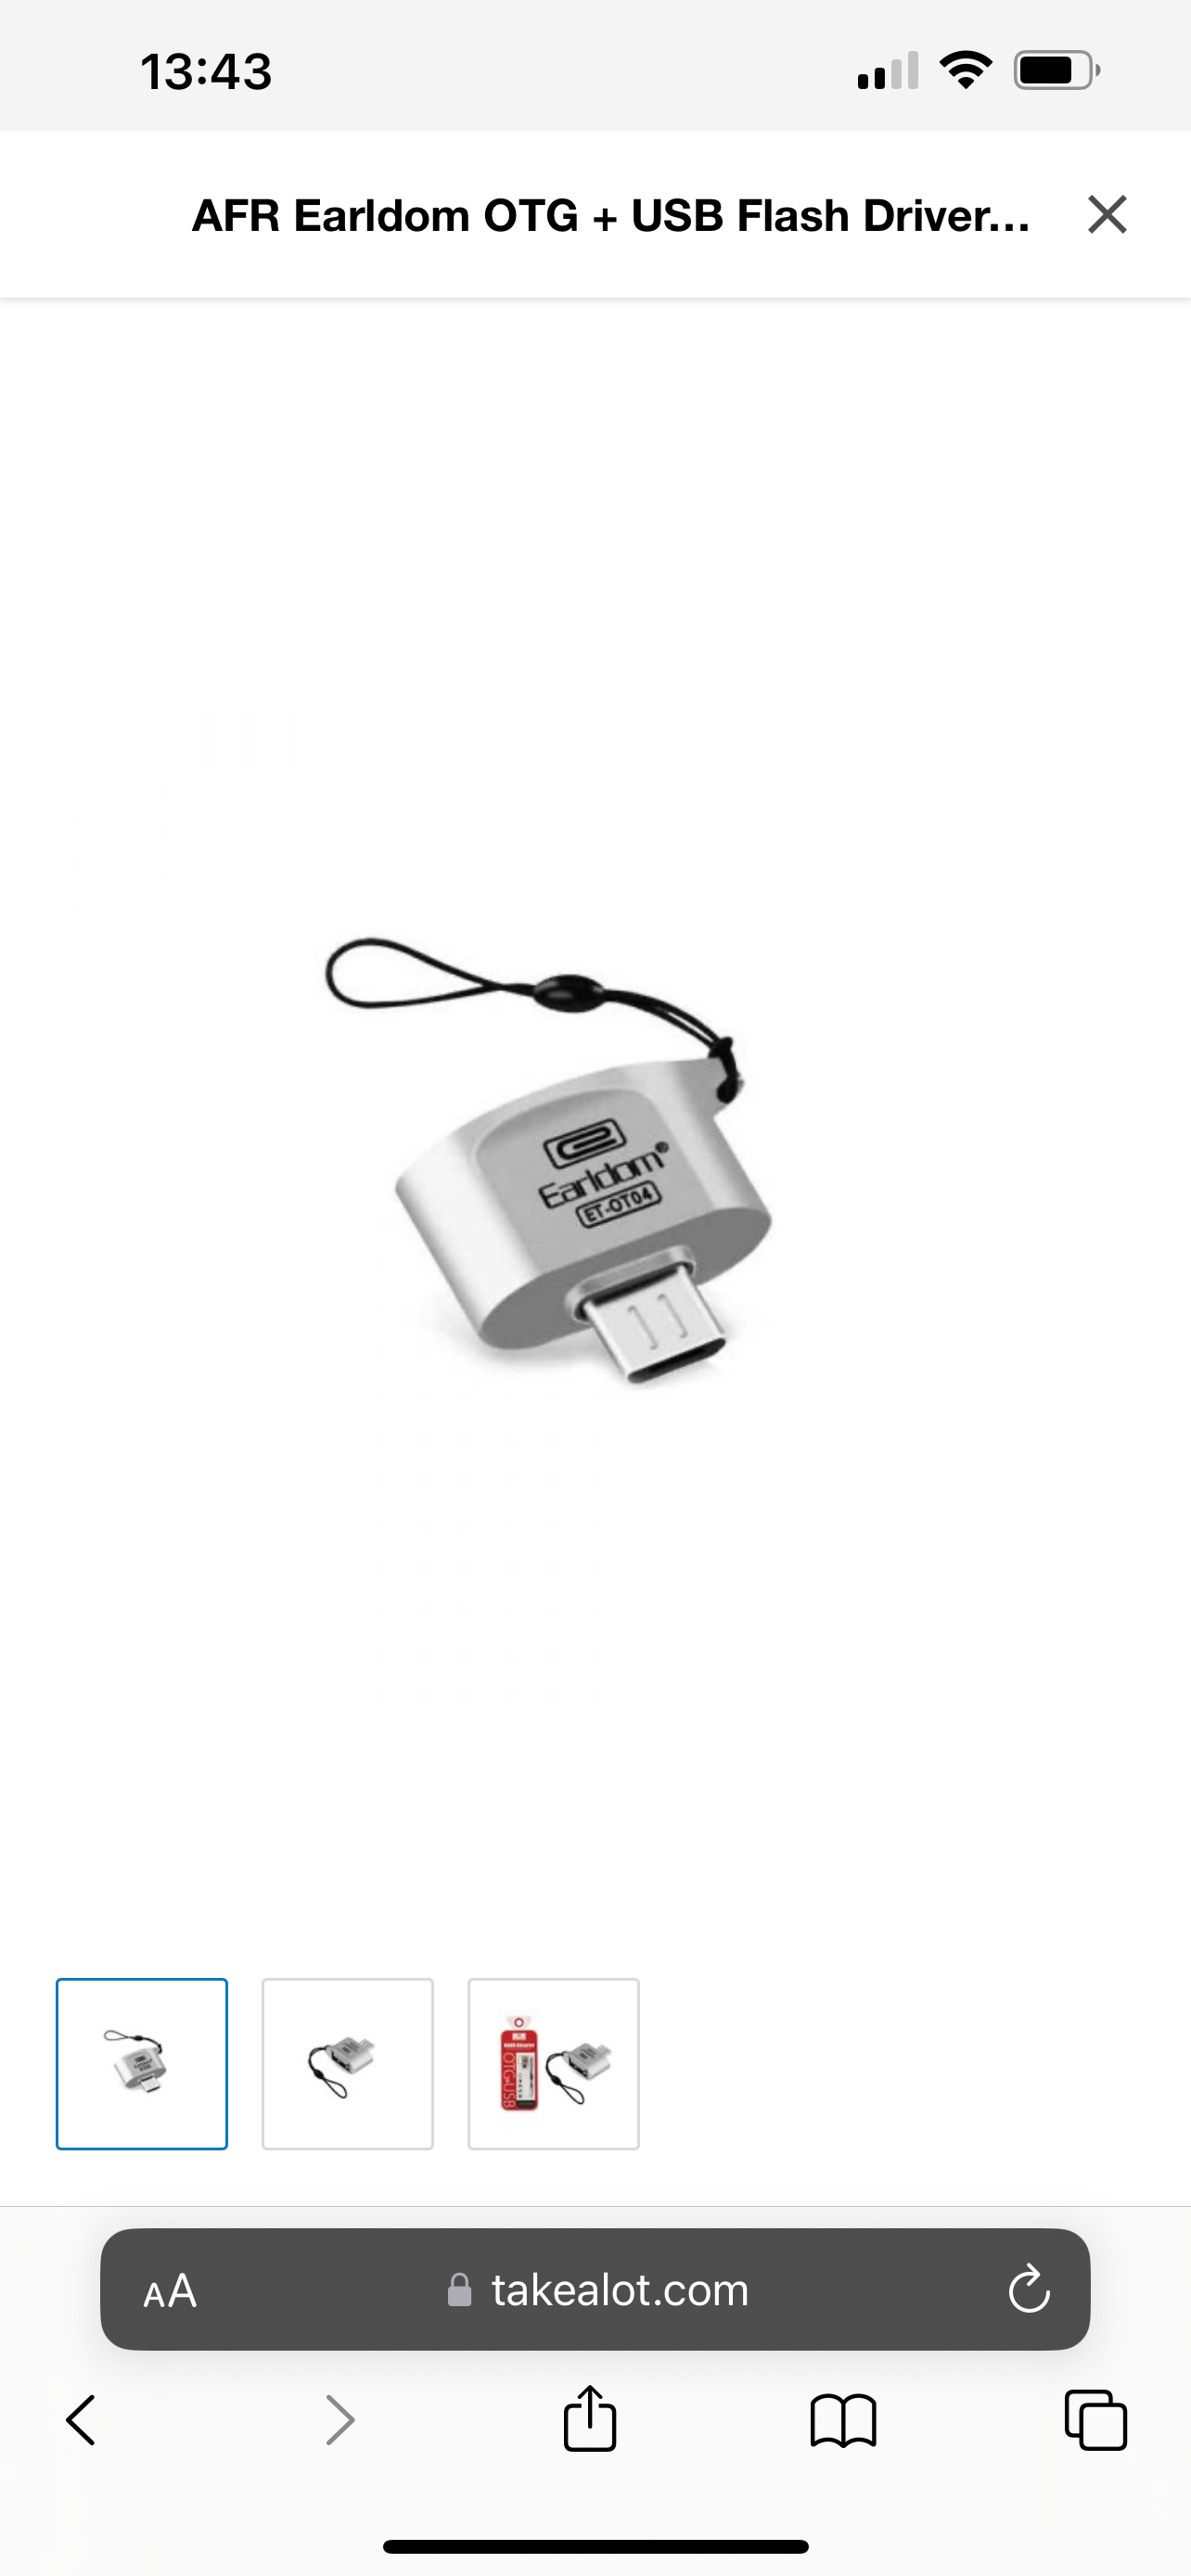 Micro USB/USB2.0 Adapter